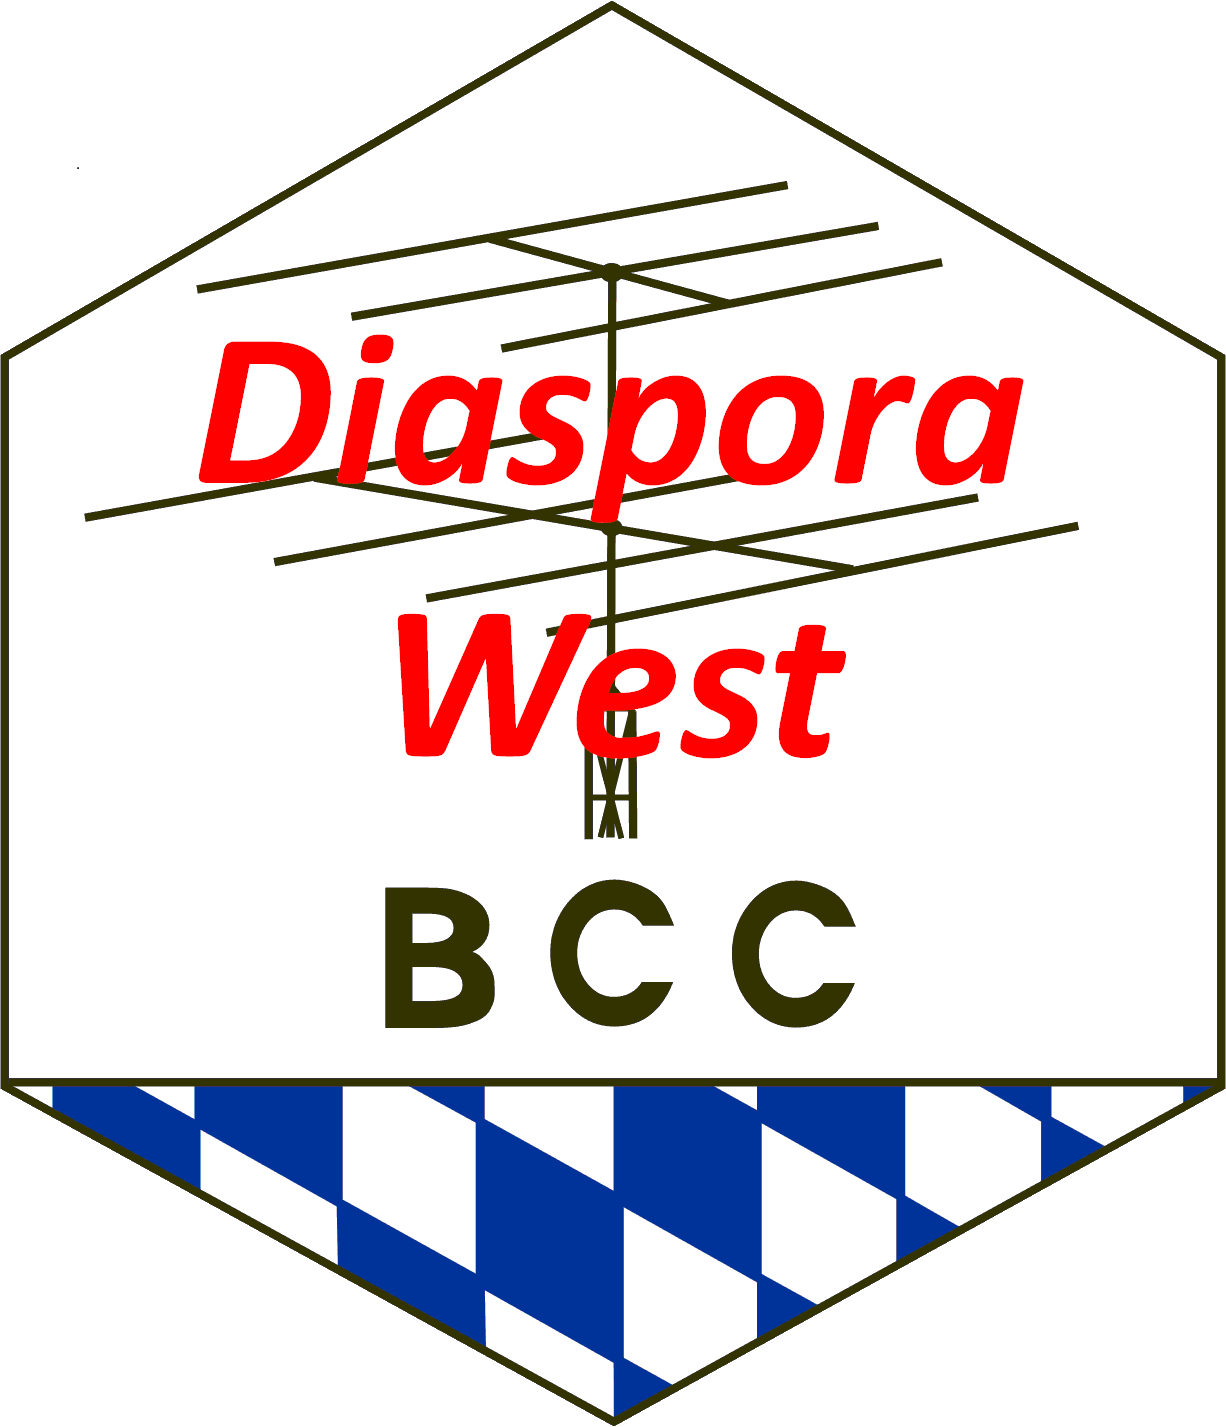 BCC Diaspora West